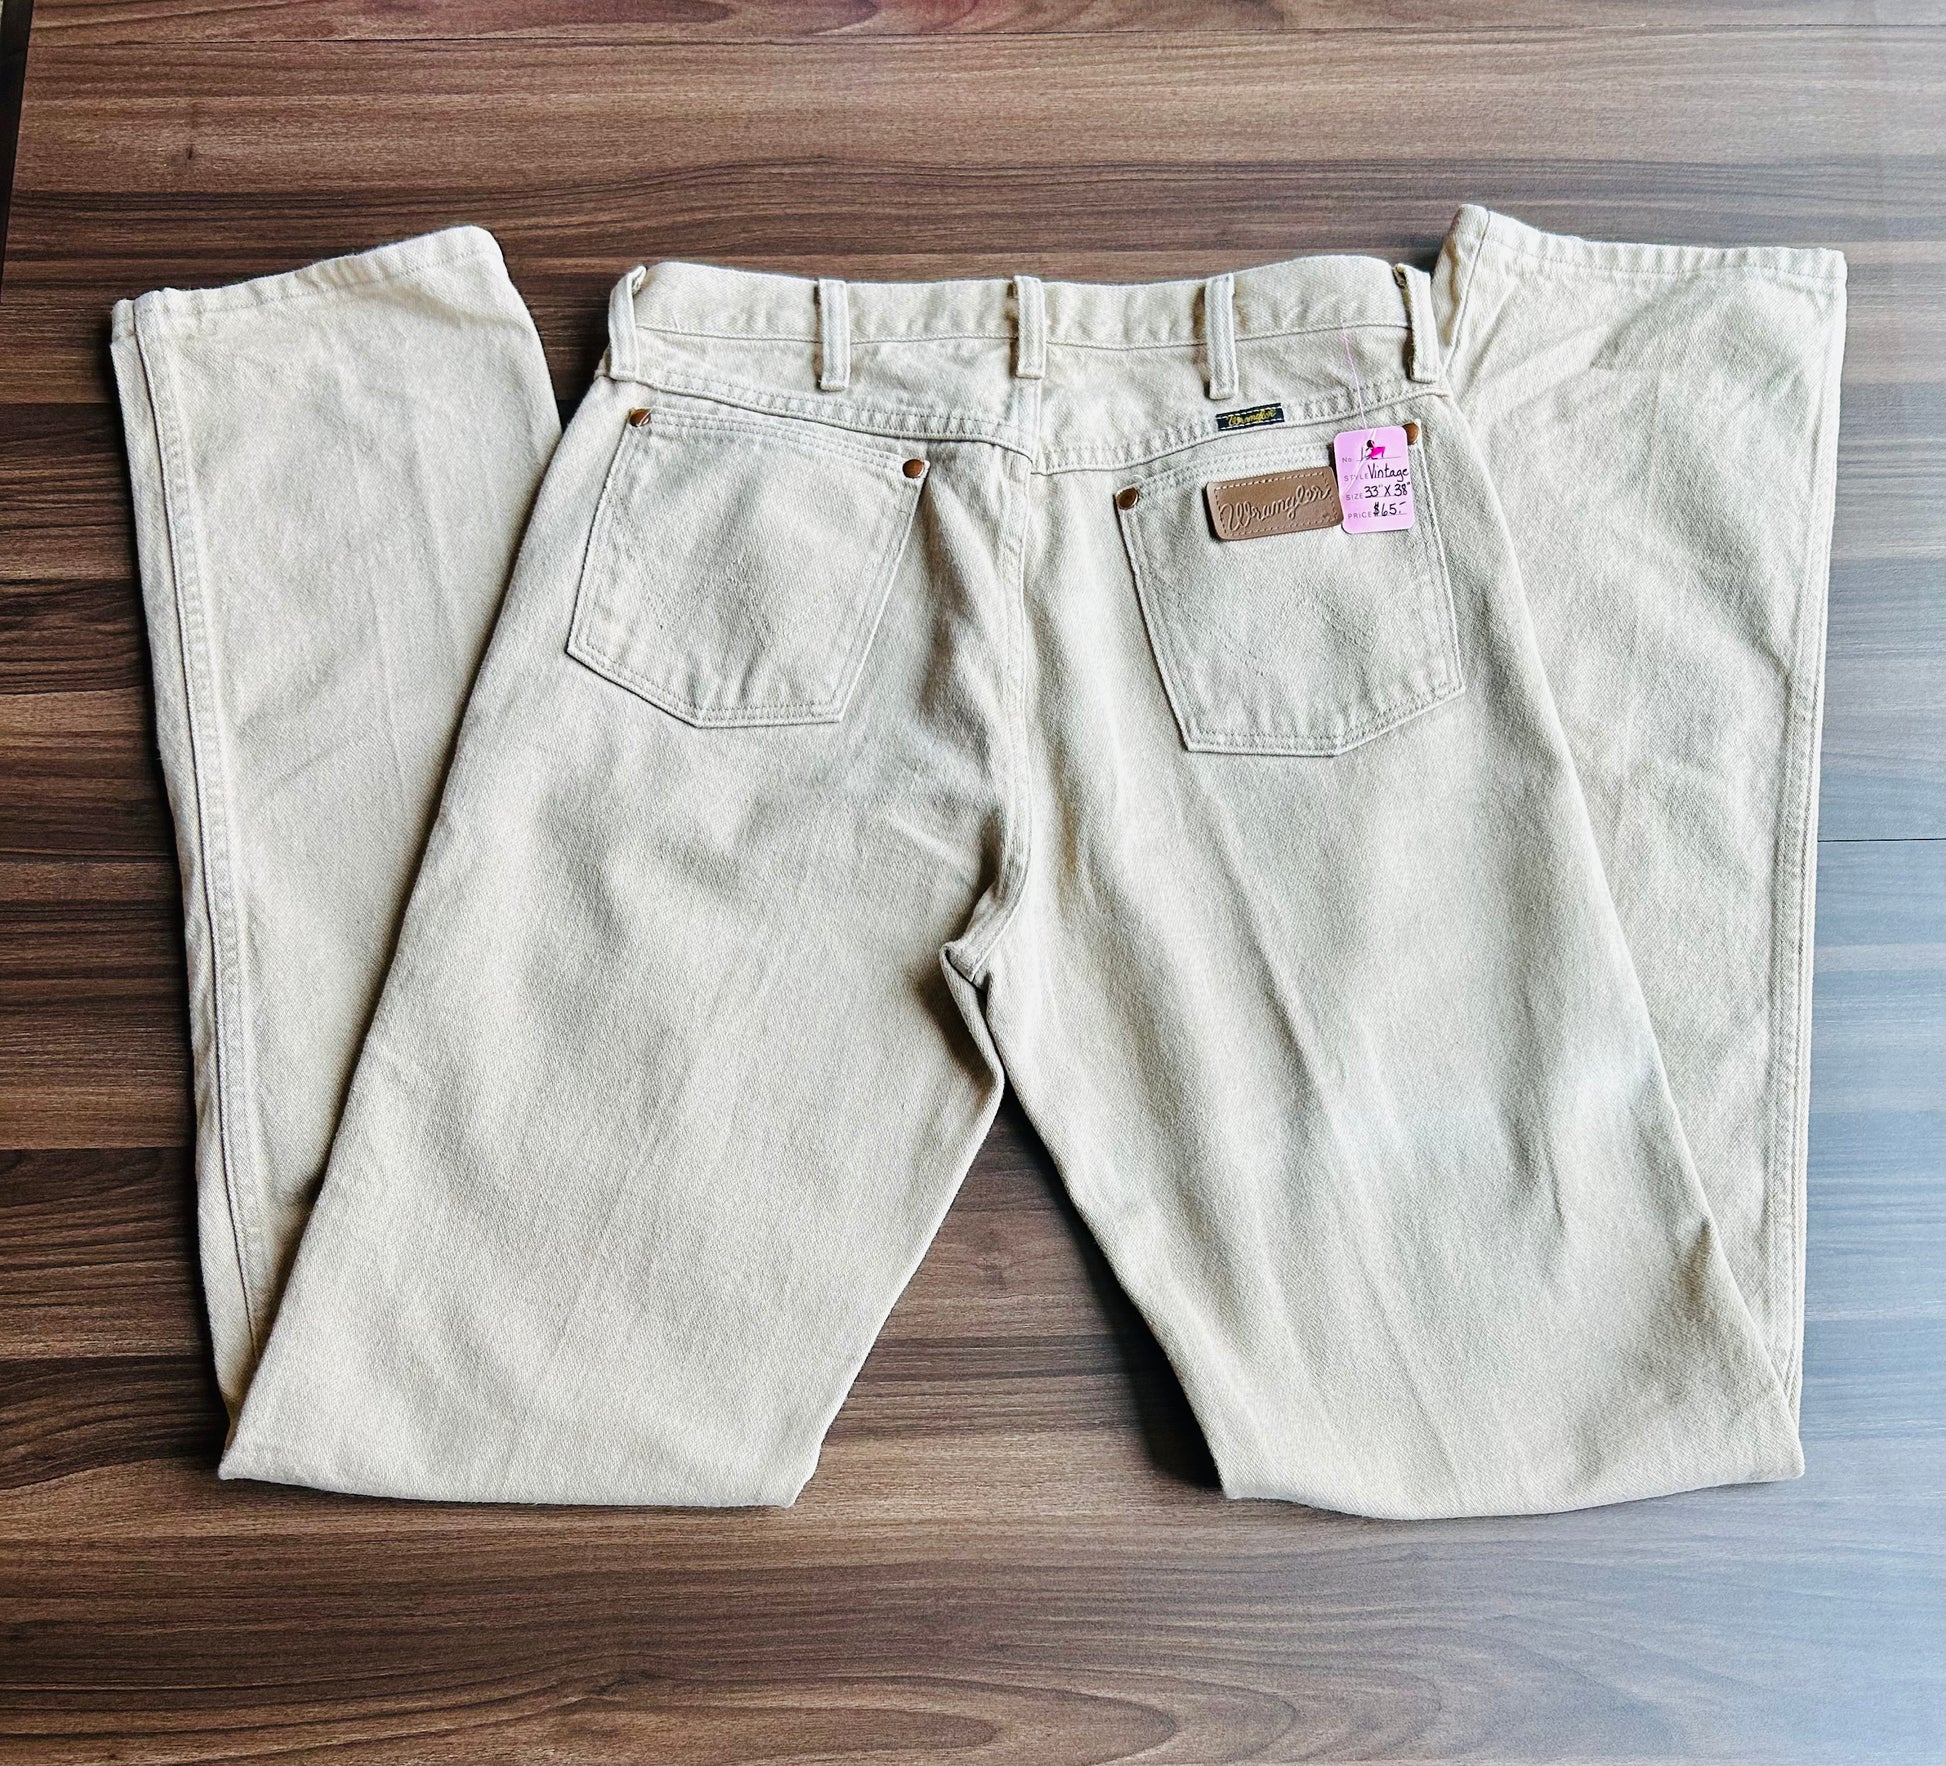 Wrangler Cowboy Cut Tan Jeans Size 34x39 – Wrangled Vintage Wear